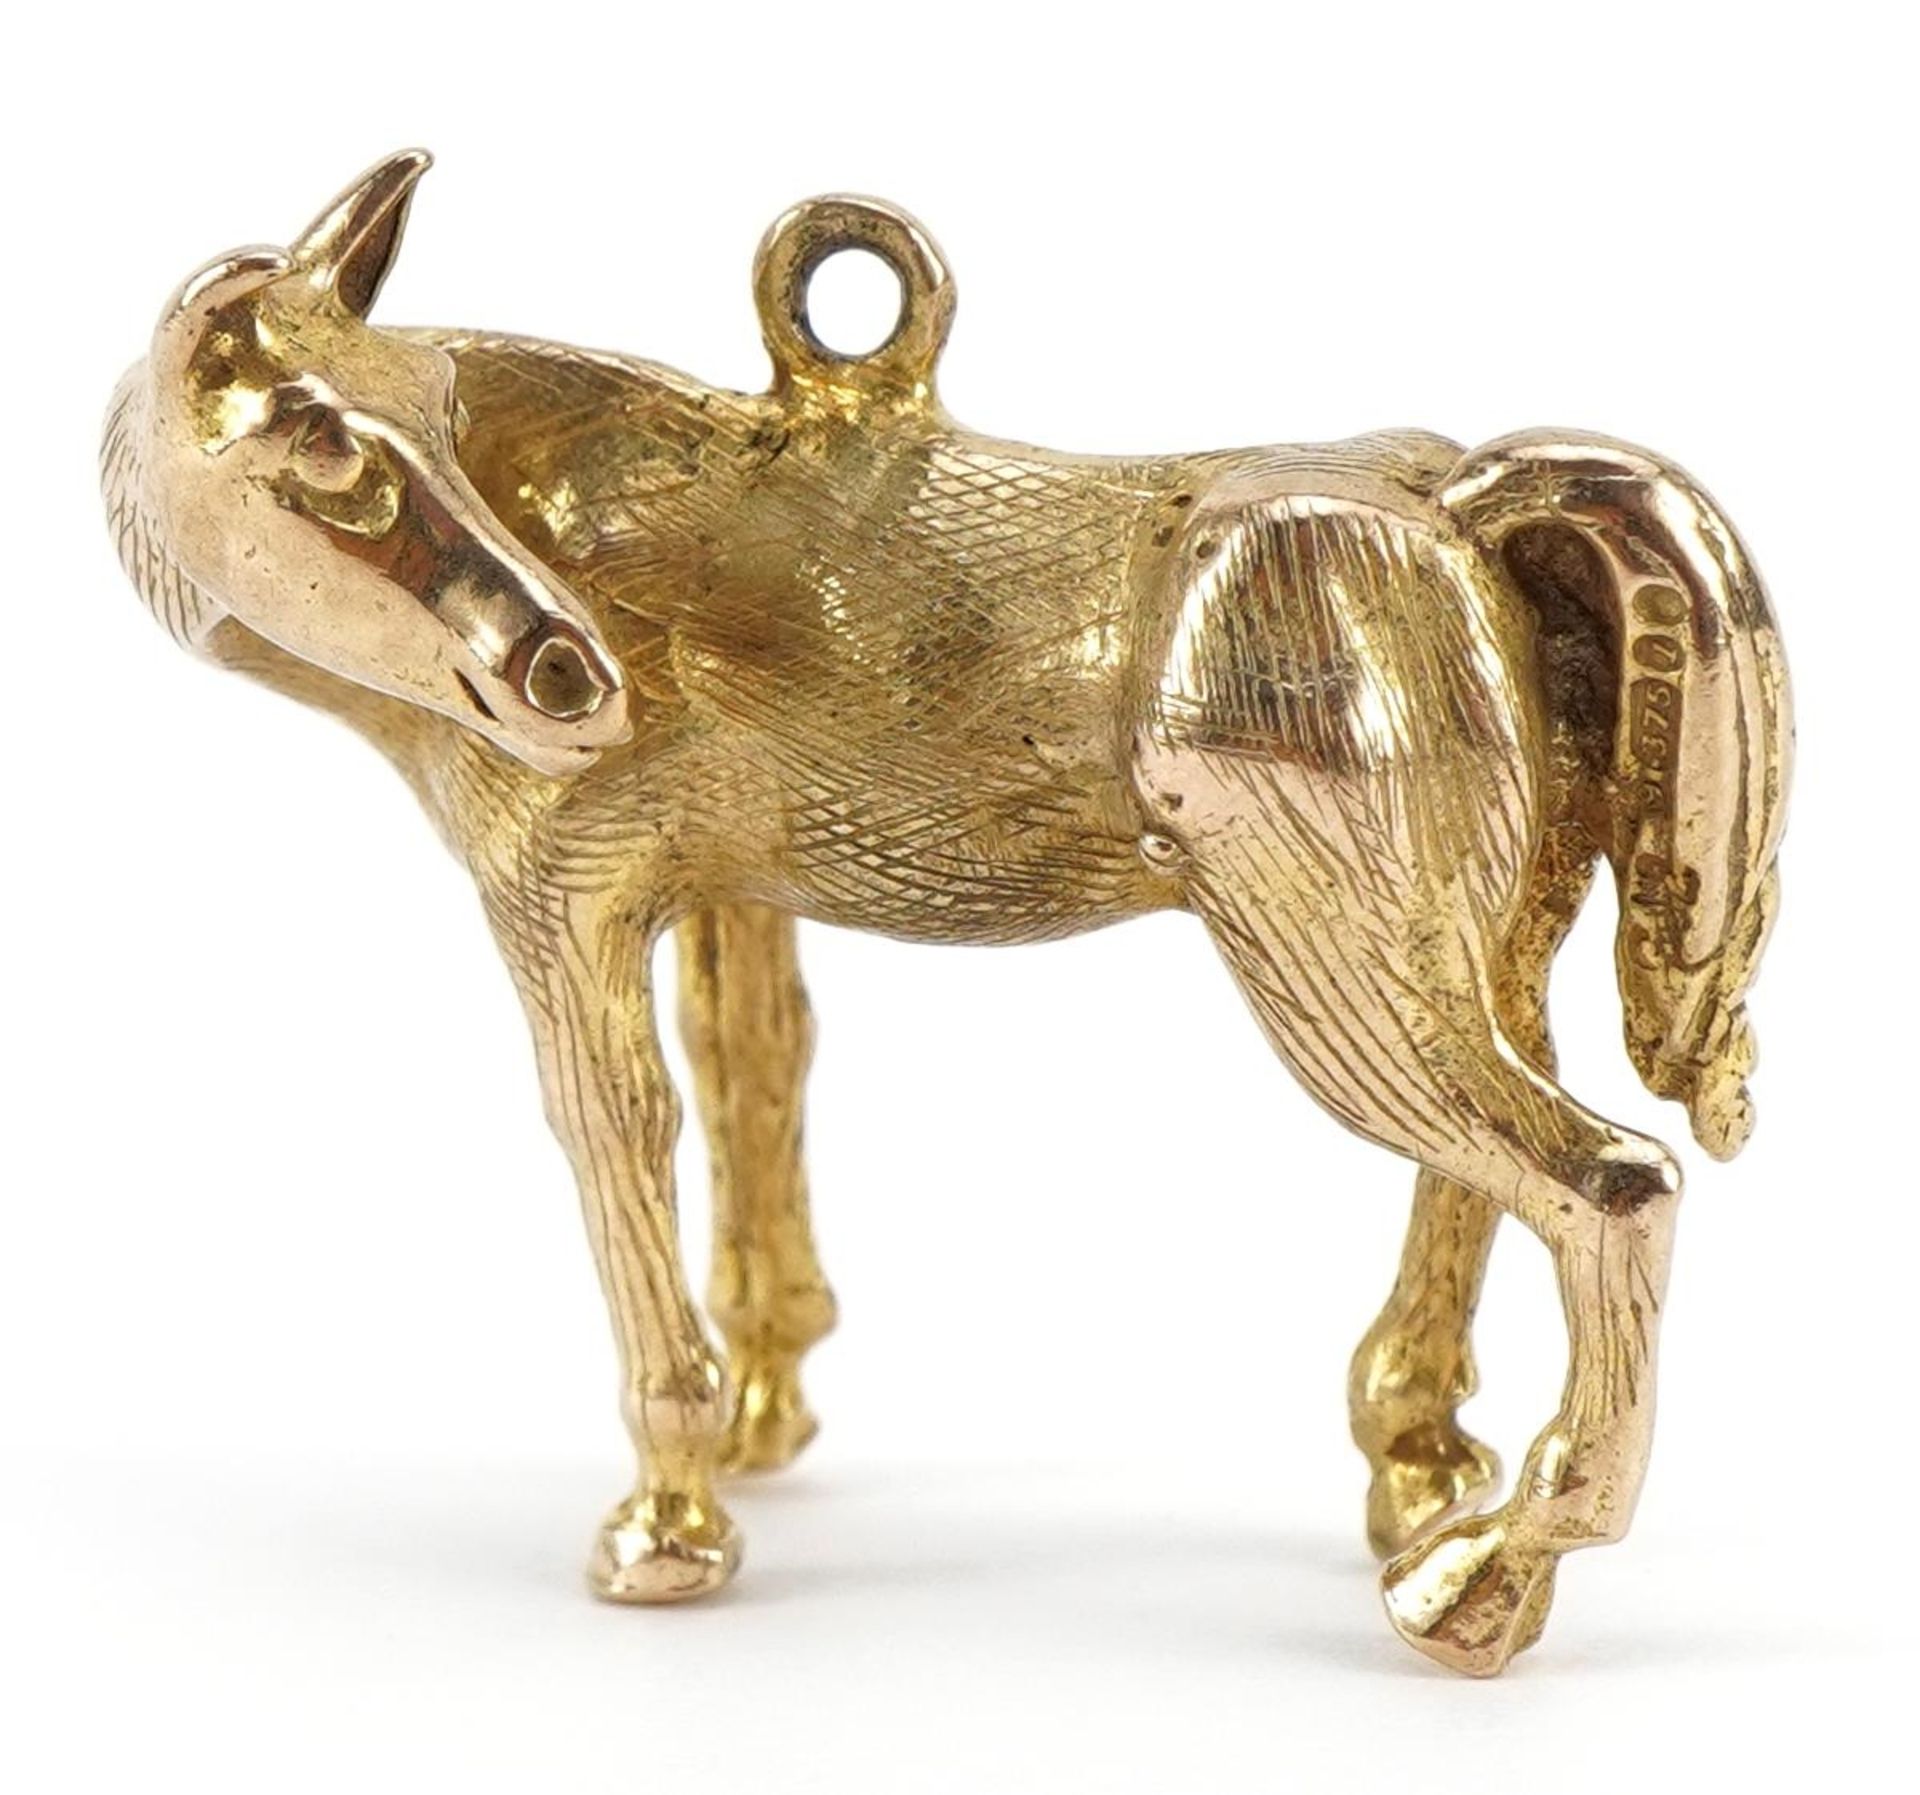 9ct gold horse pendant, 2.3cm high, 7.8g